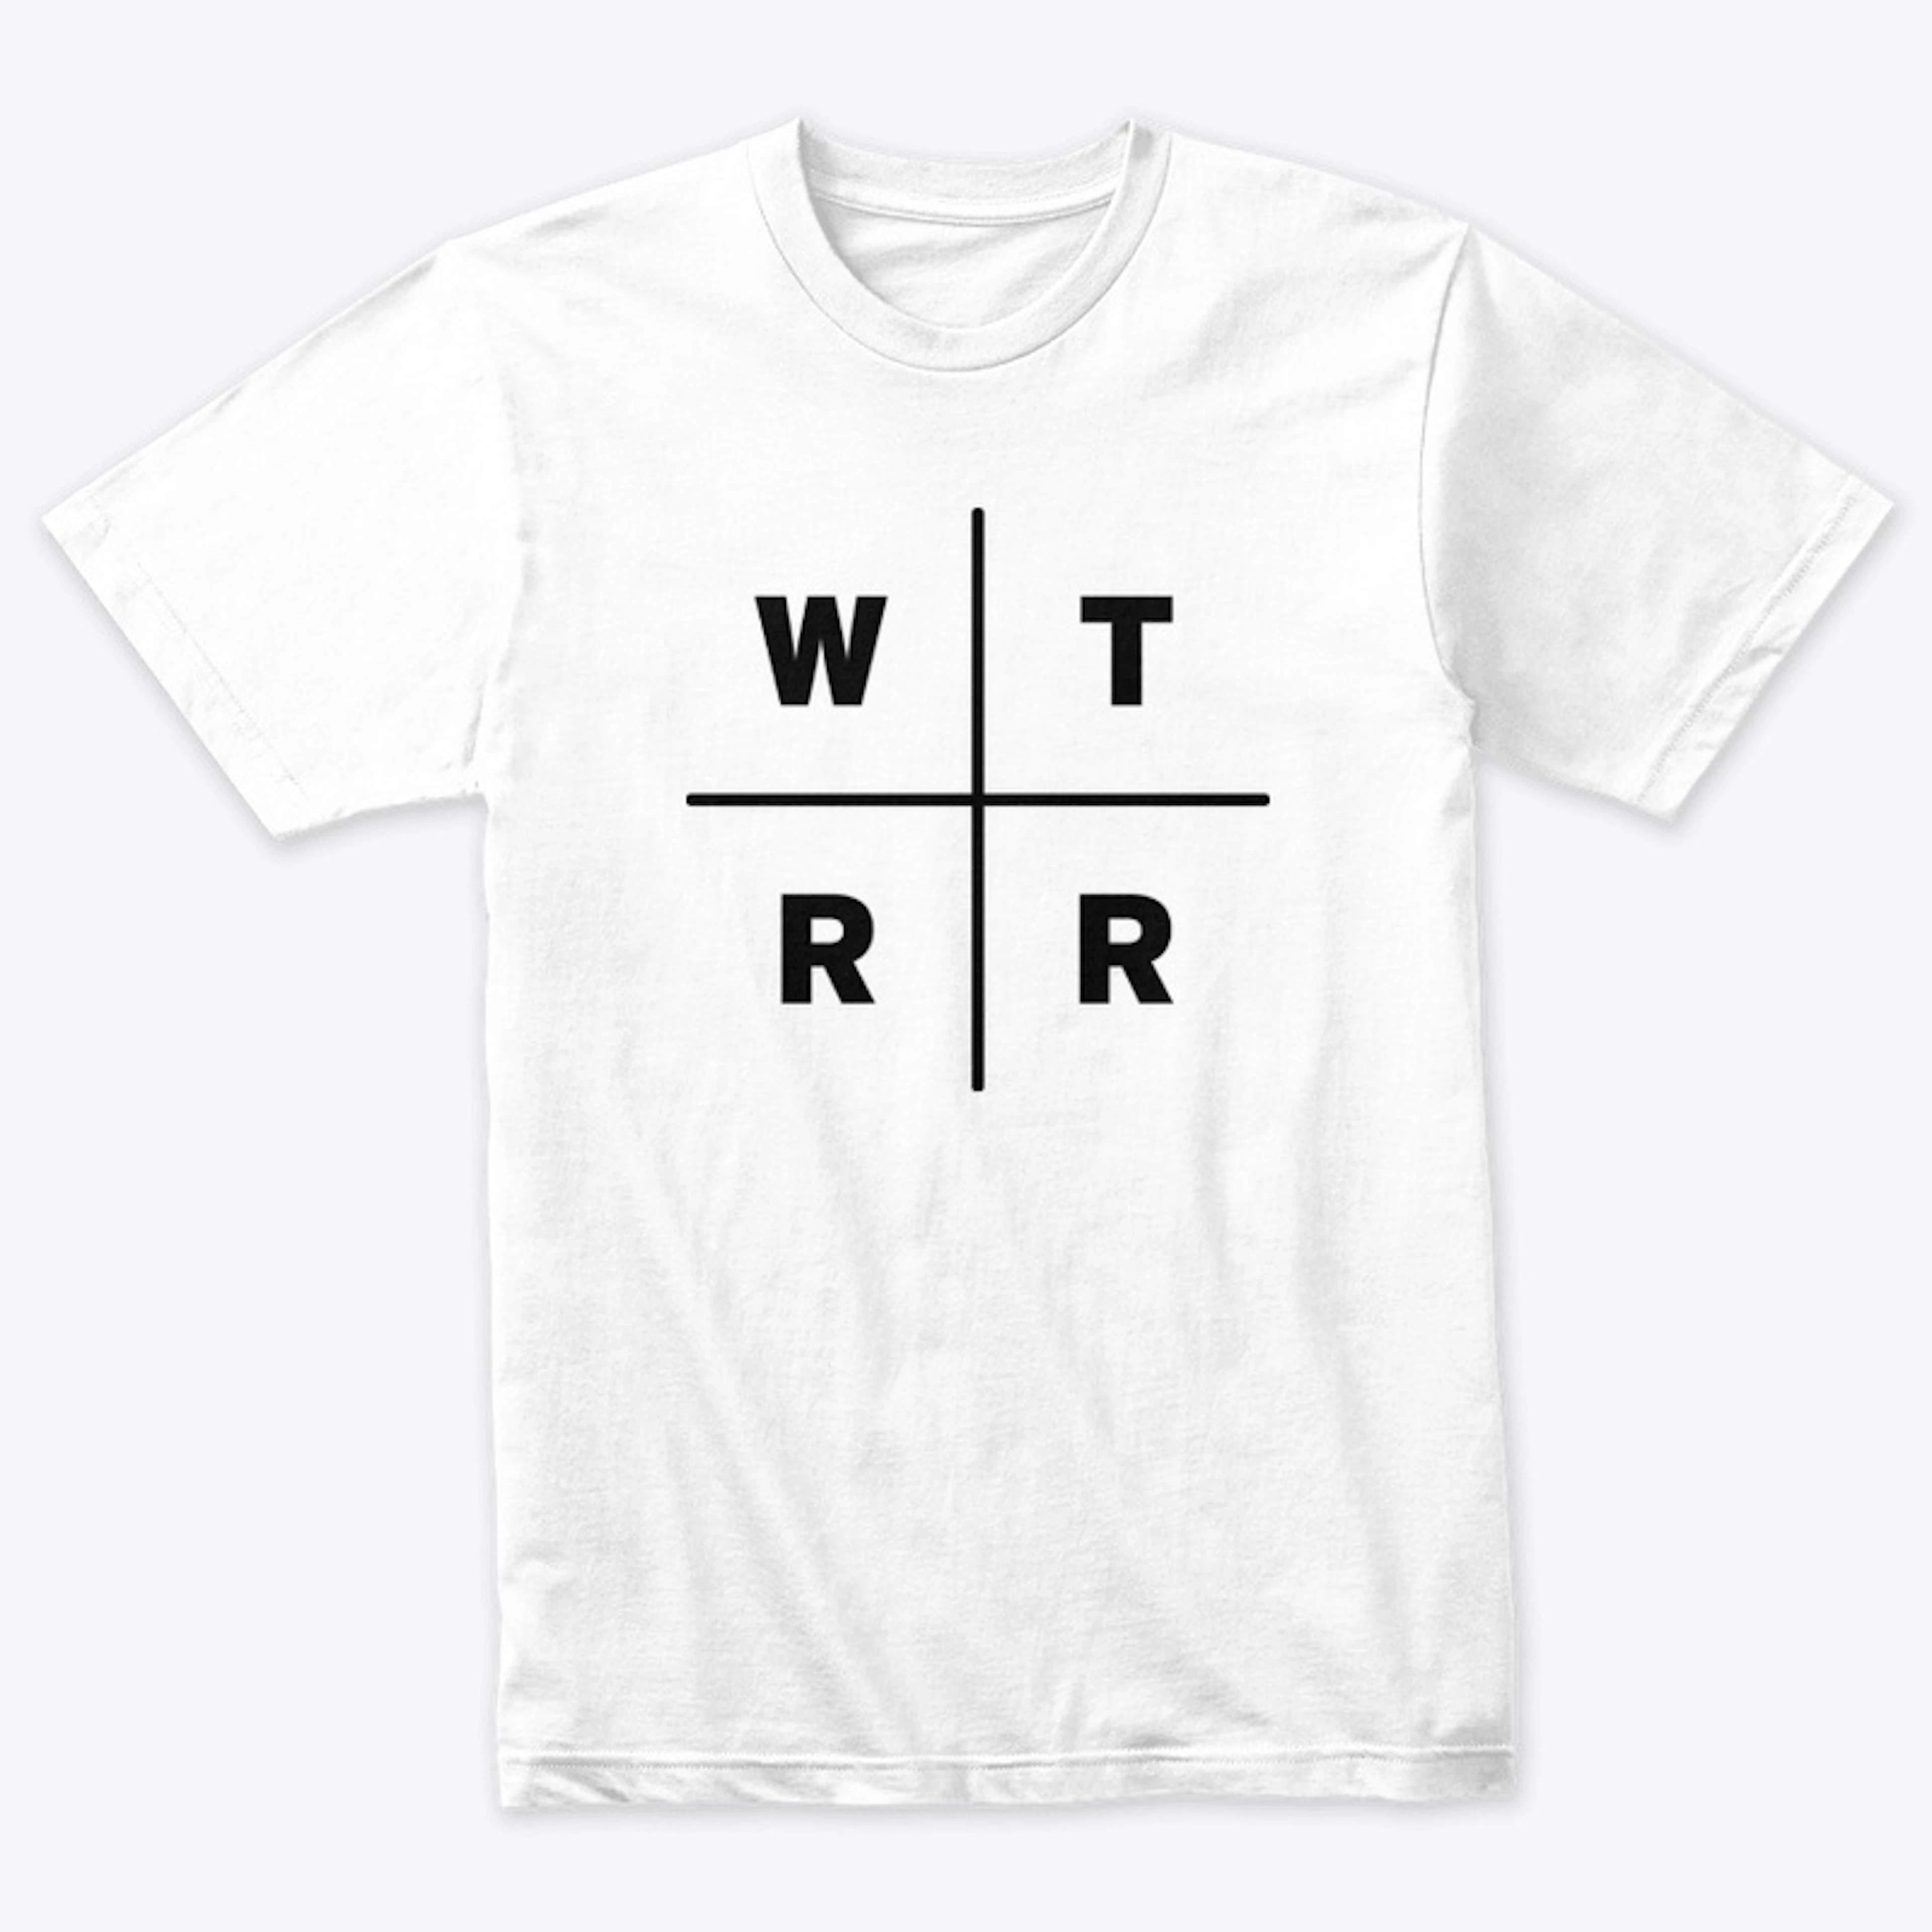 WTRR Triblend White T